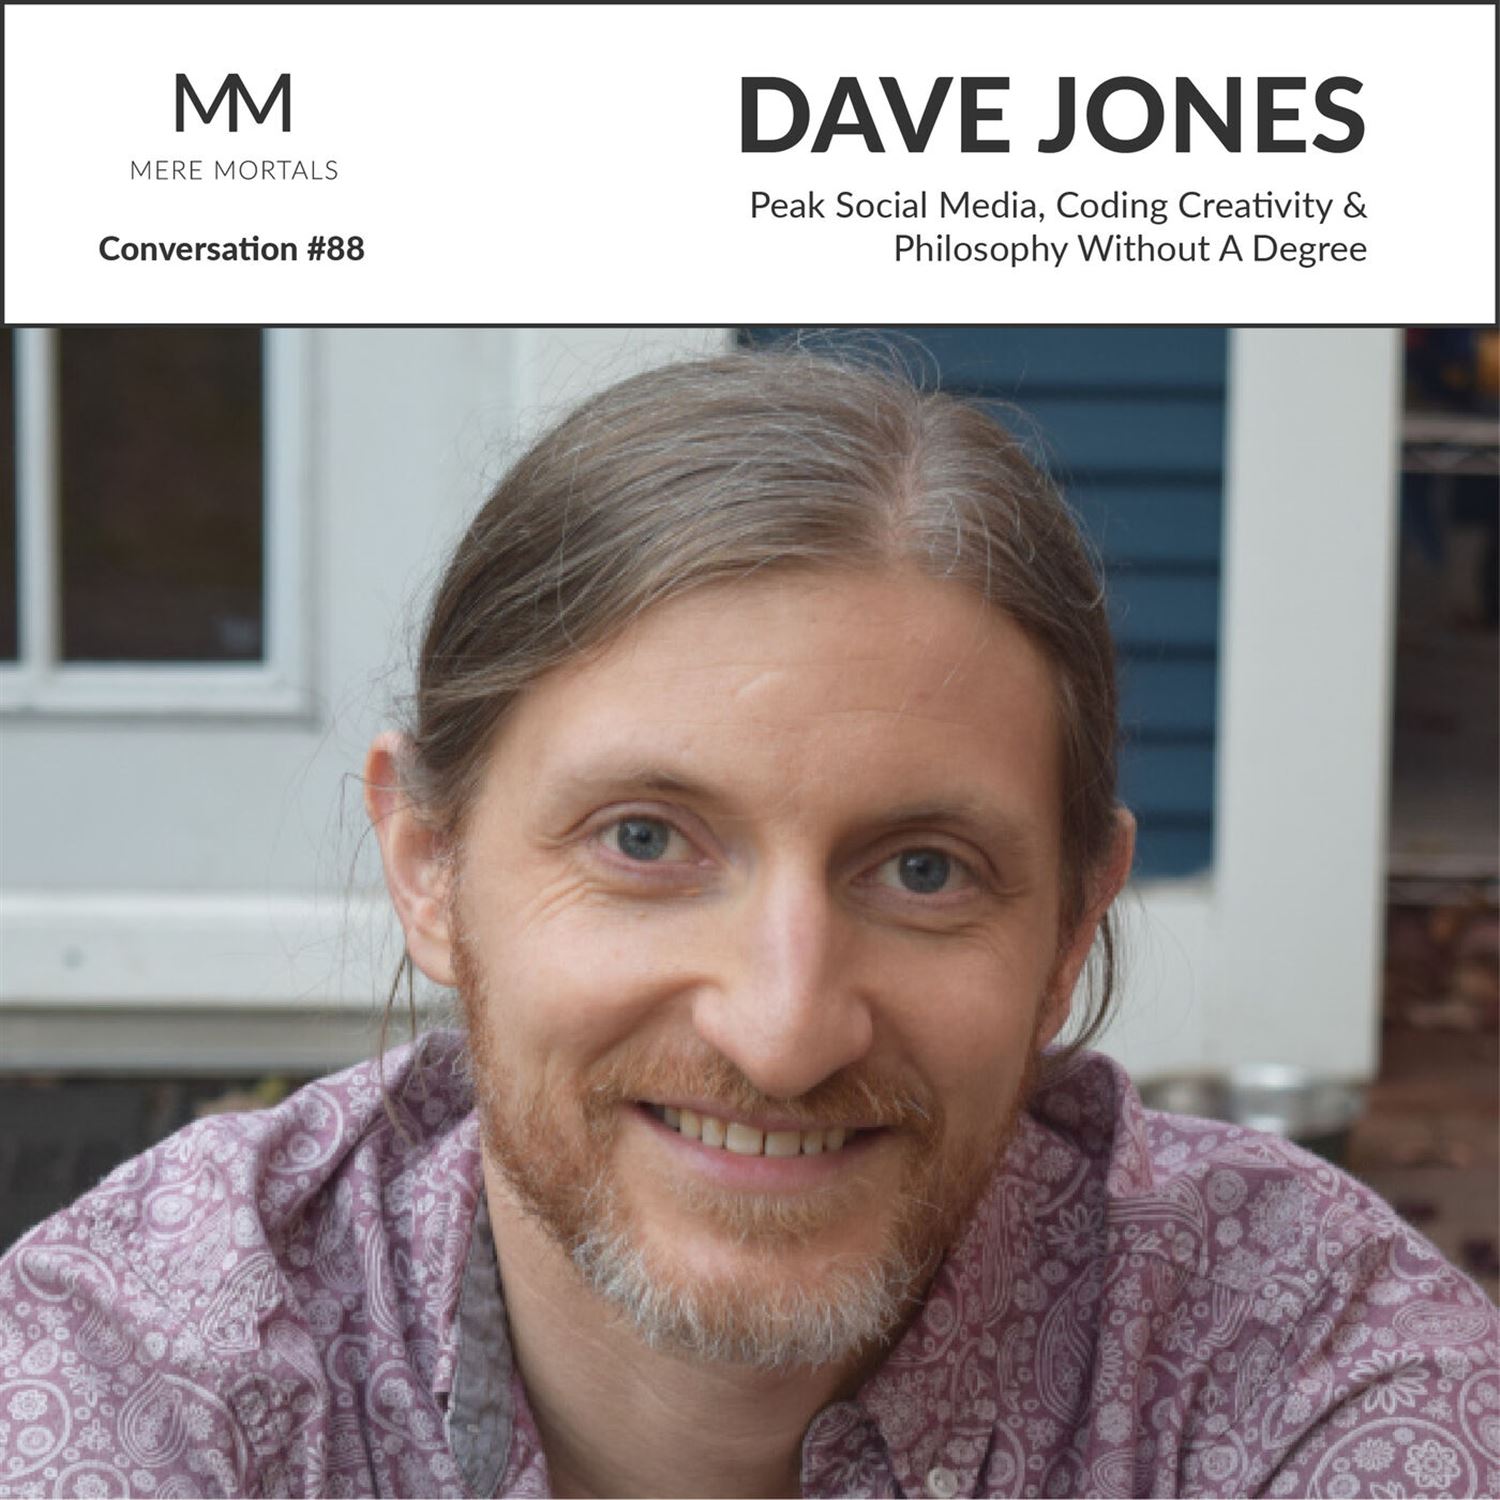 DAVE JONES | Peak Social Media, Coding Creativity & Philosophy Without A Degree